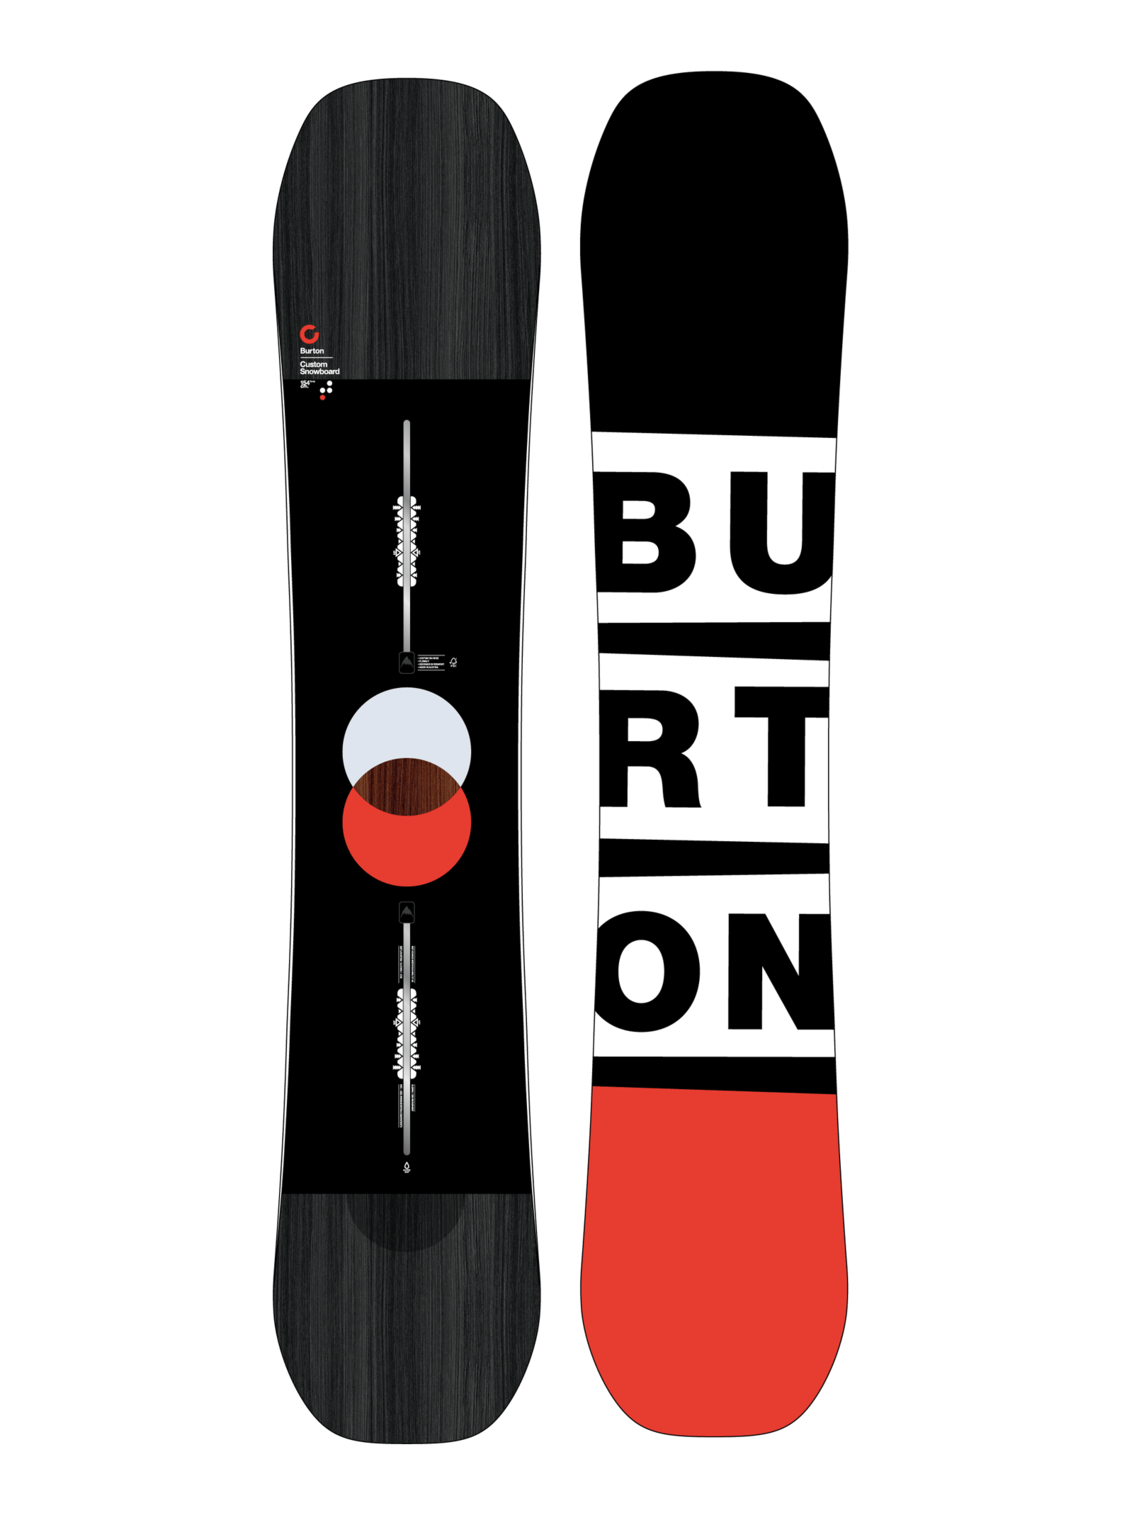 BURTON 2019-20 CUSTOM 154